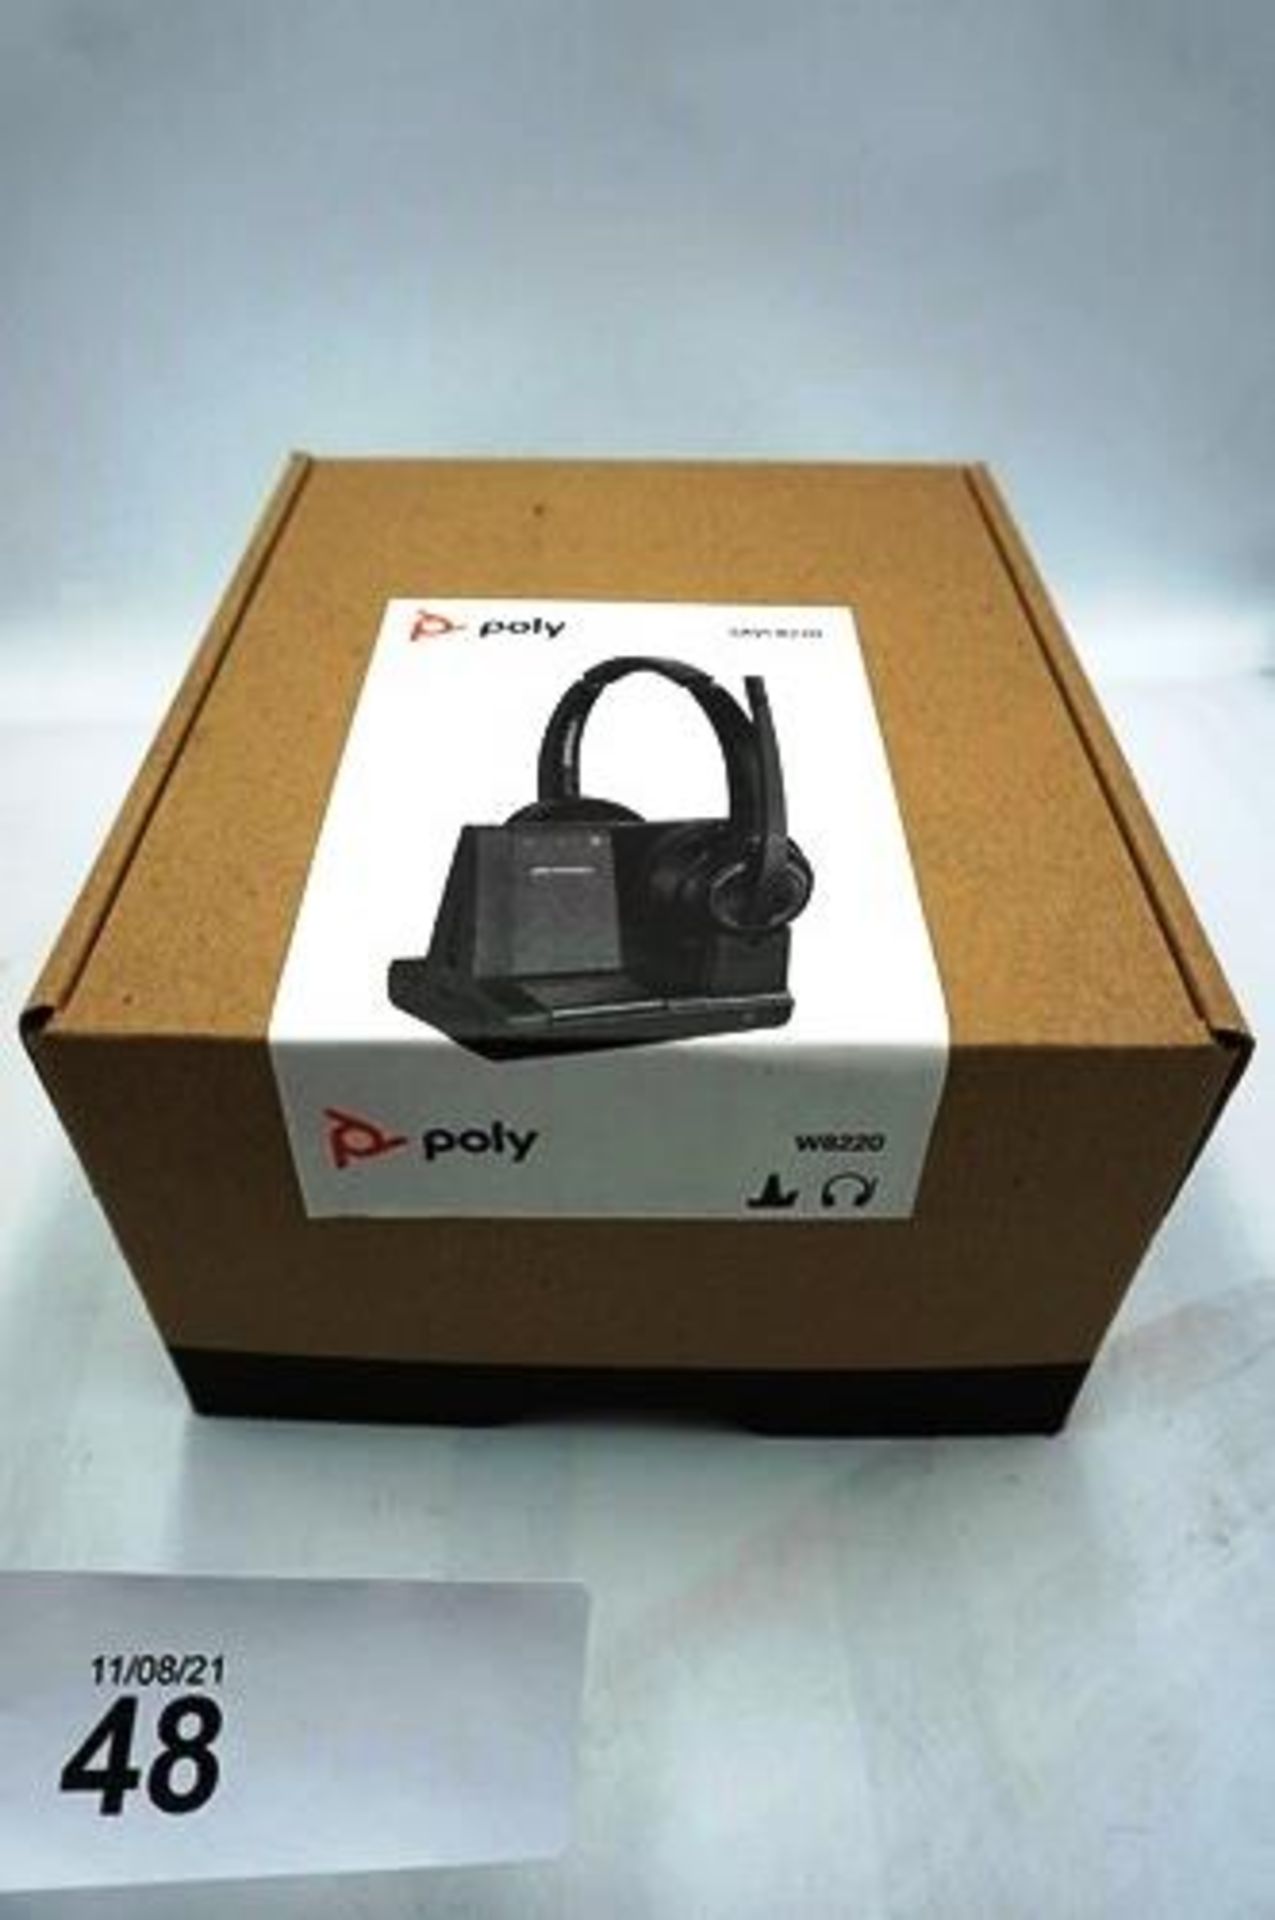 1 x Plantronics Poly Savi 8220 office phones, model 207325-12 - New in box (C2)